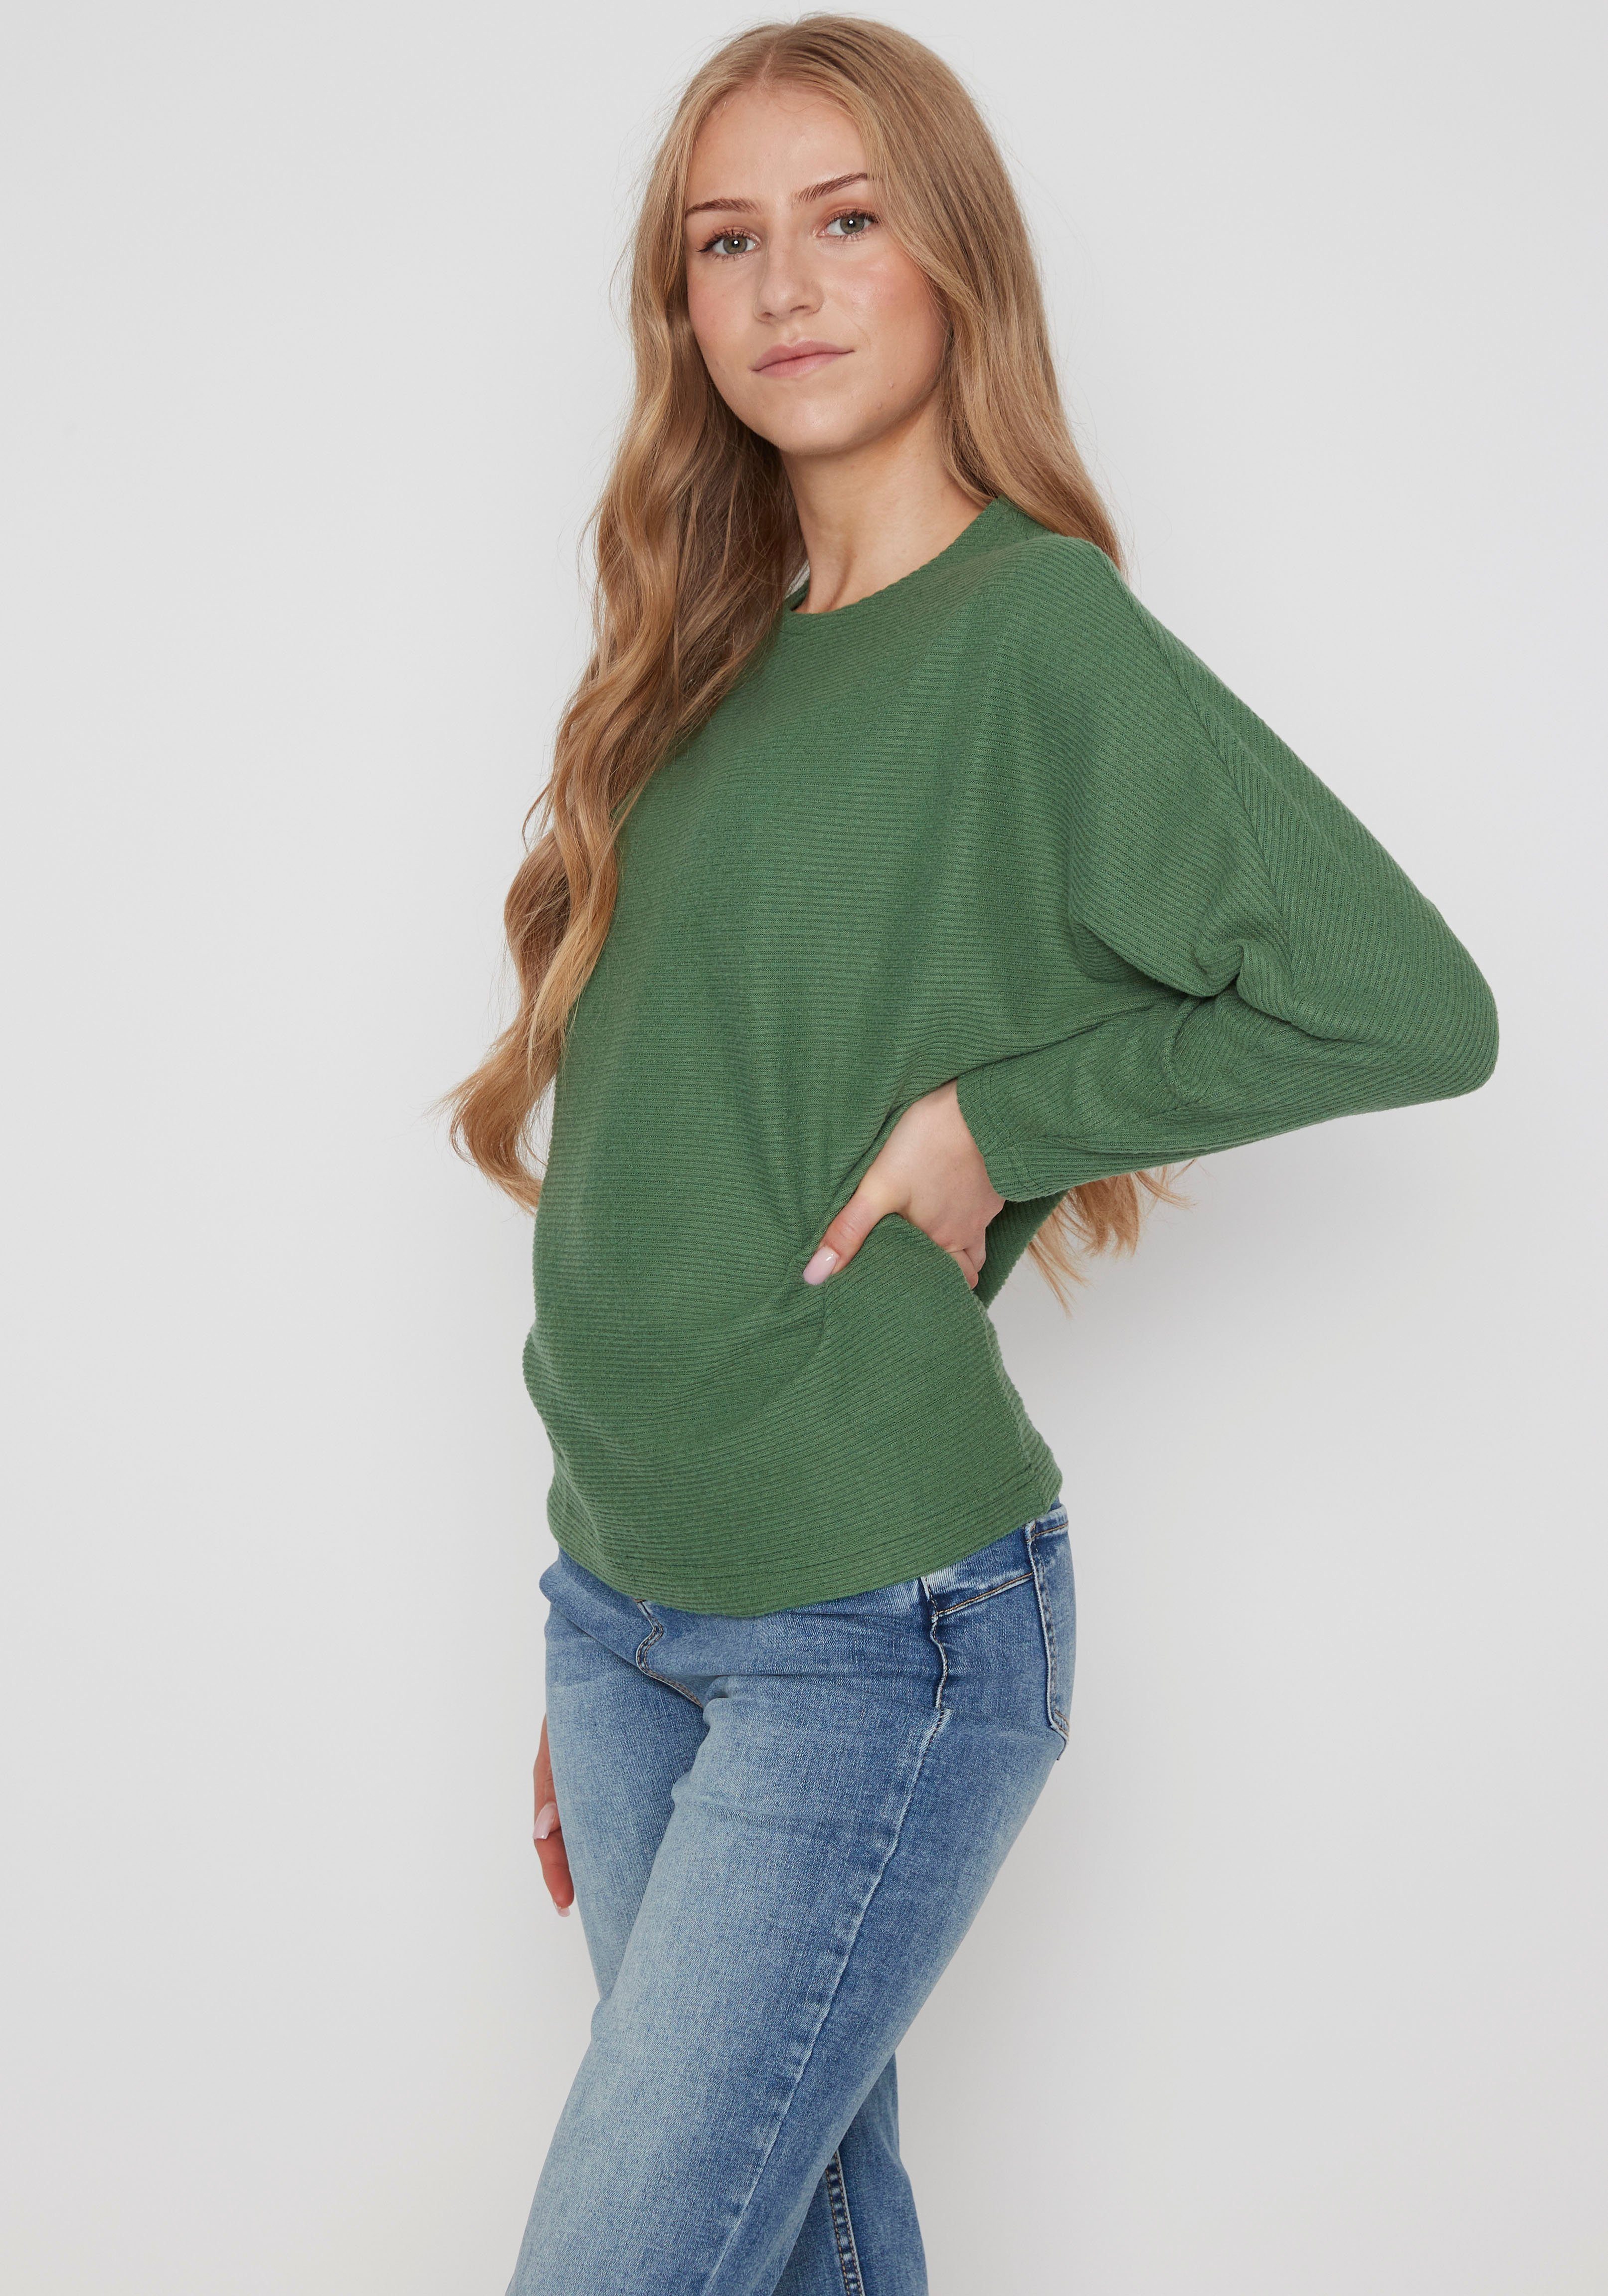 HaILY’S T-Shirt green P fern marl TP Ma44ira LS